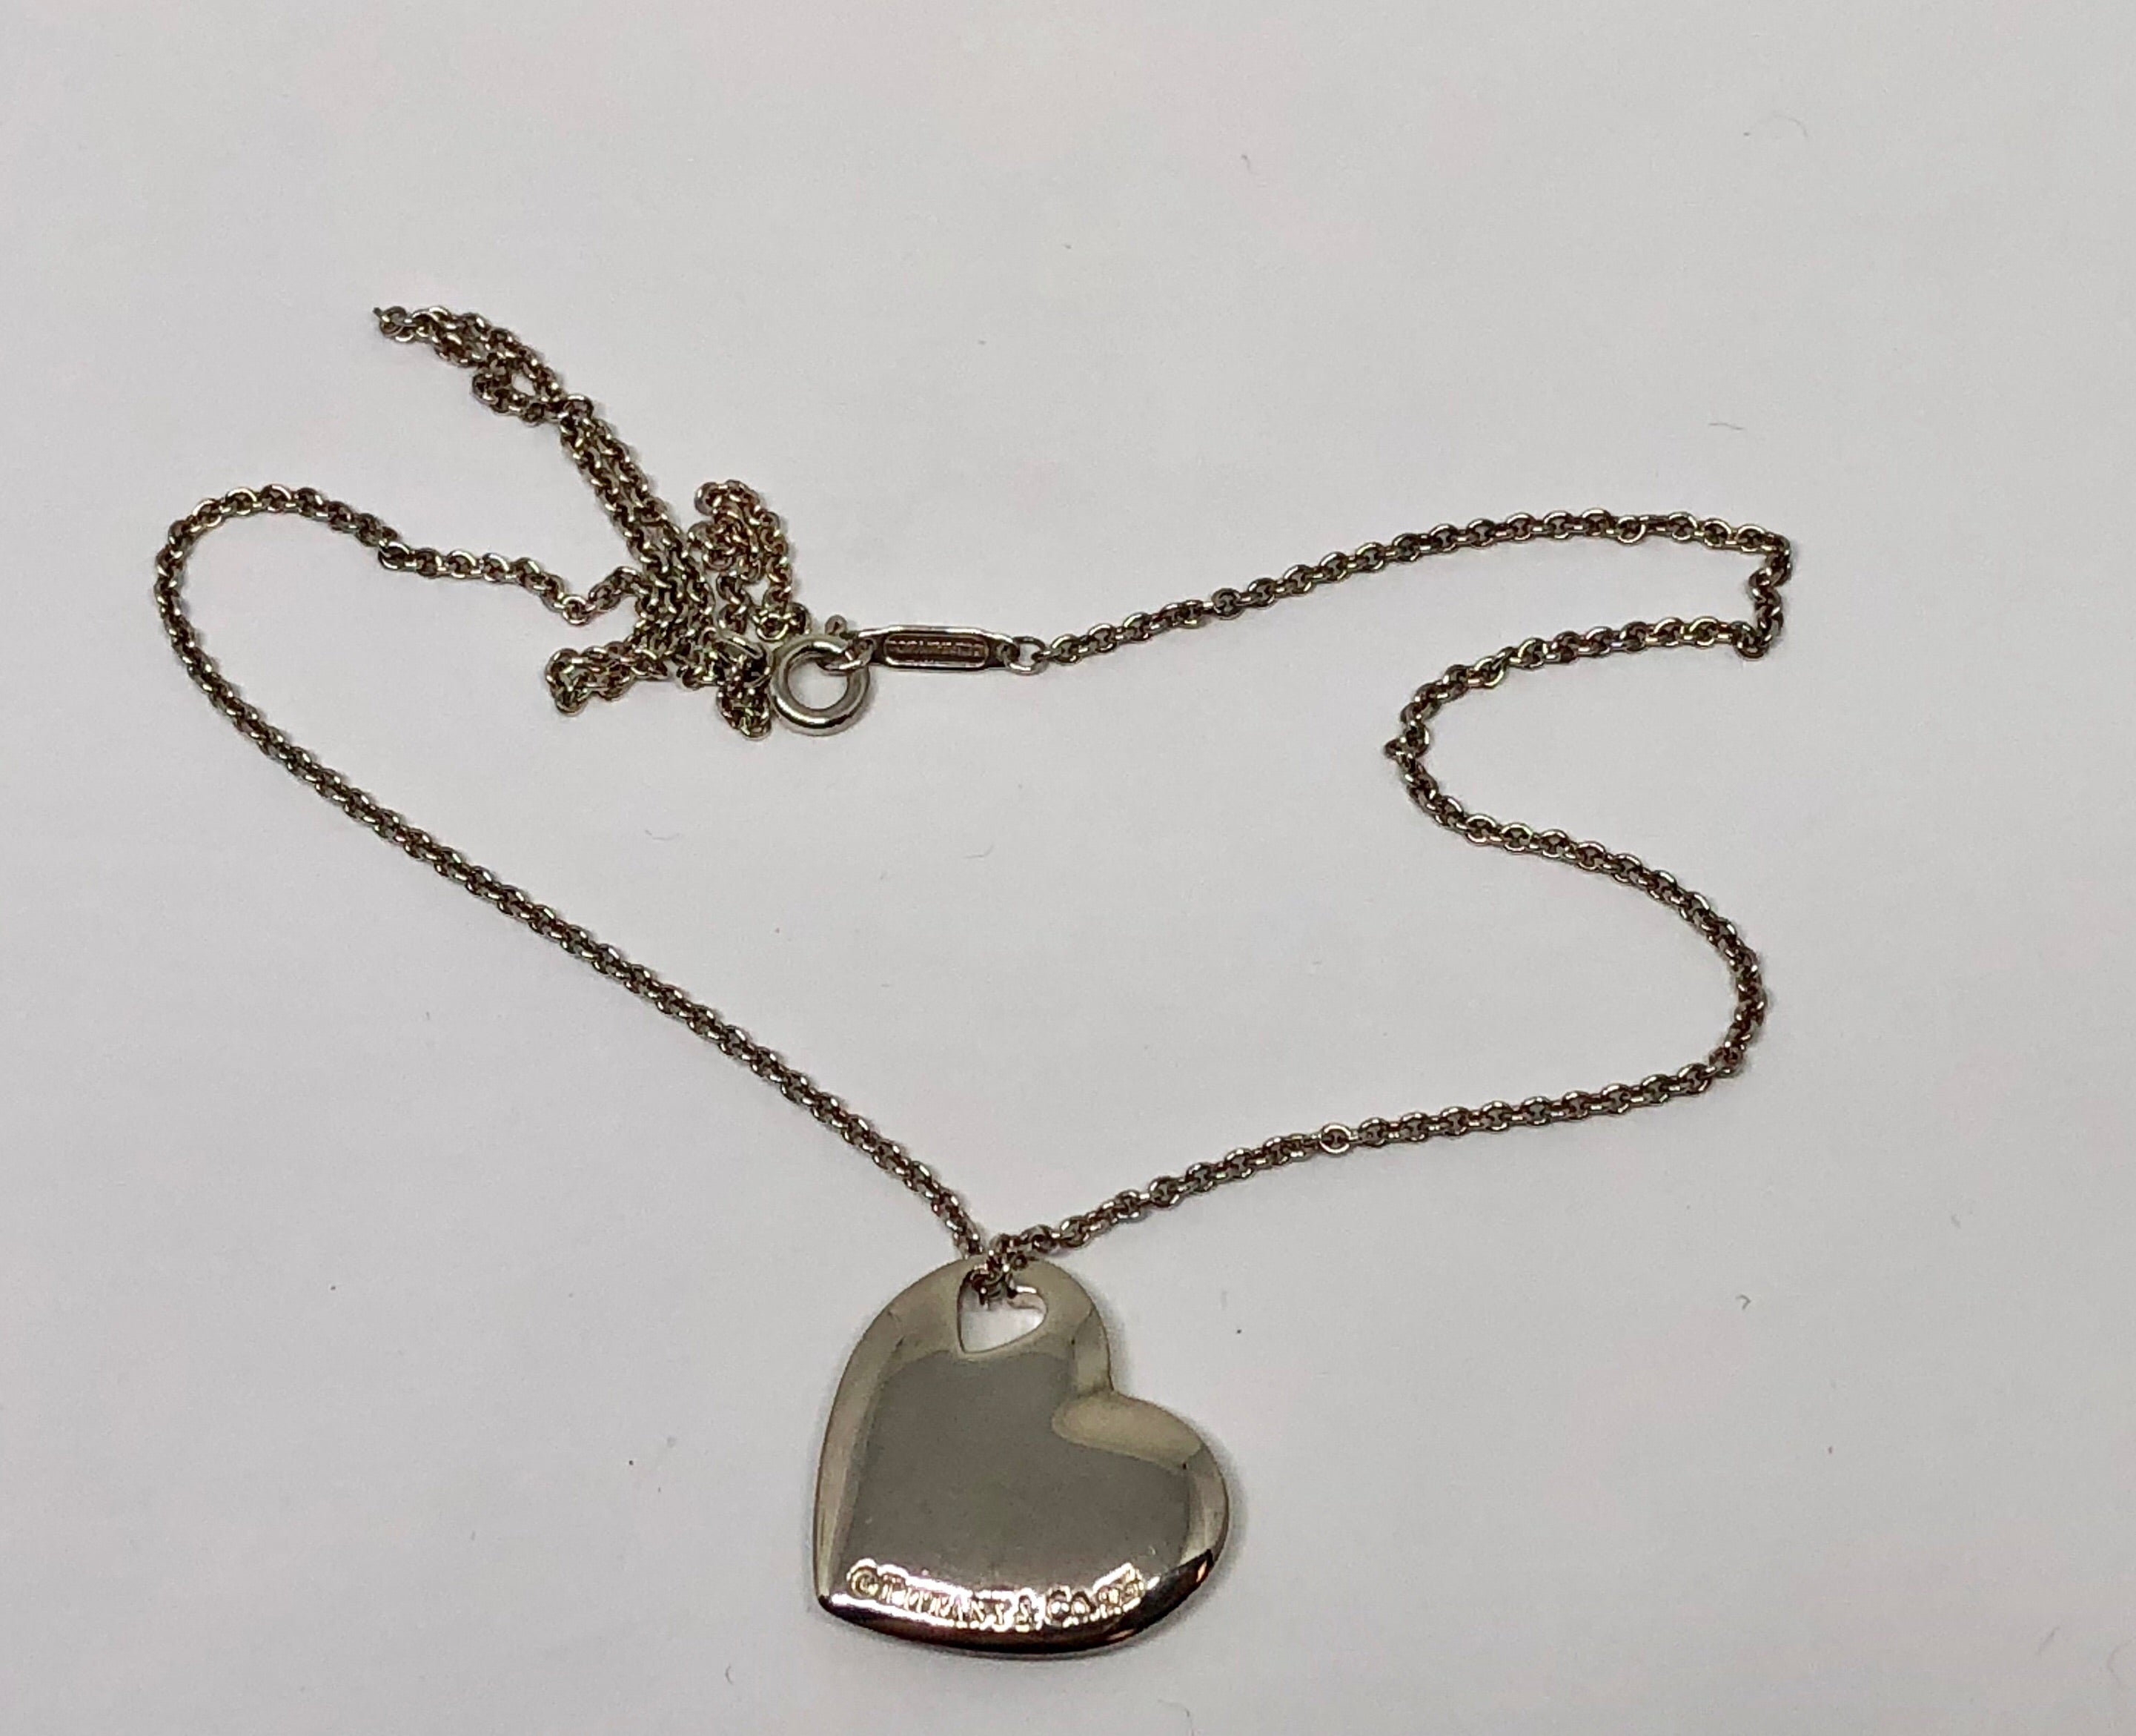 Tiffany & Co. Silver 925 Return to Mini Double Heart Pendant Necklace | eBay